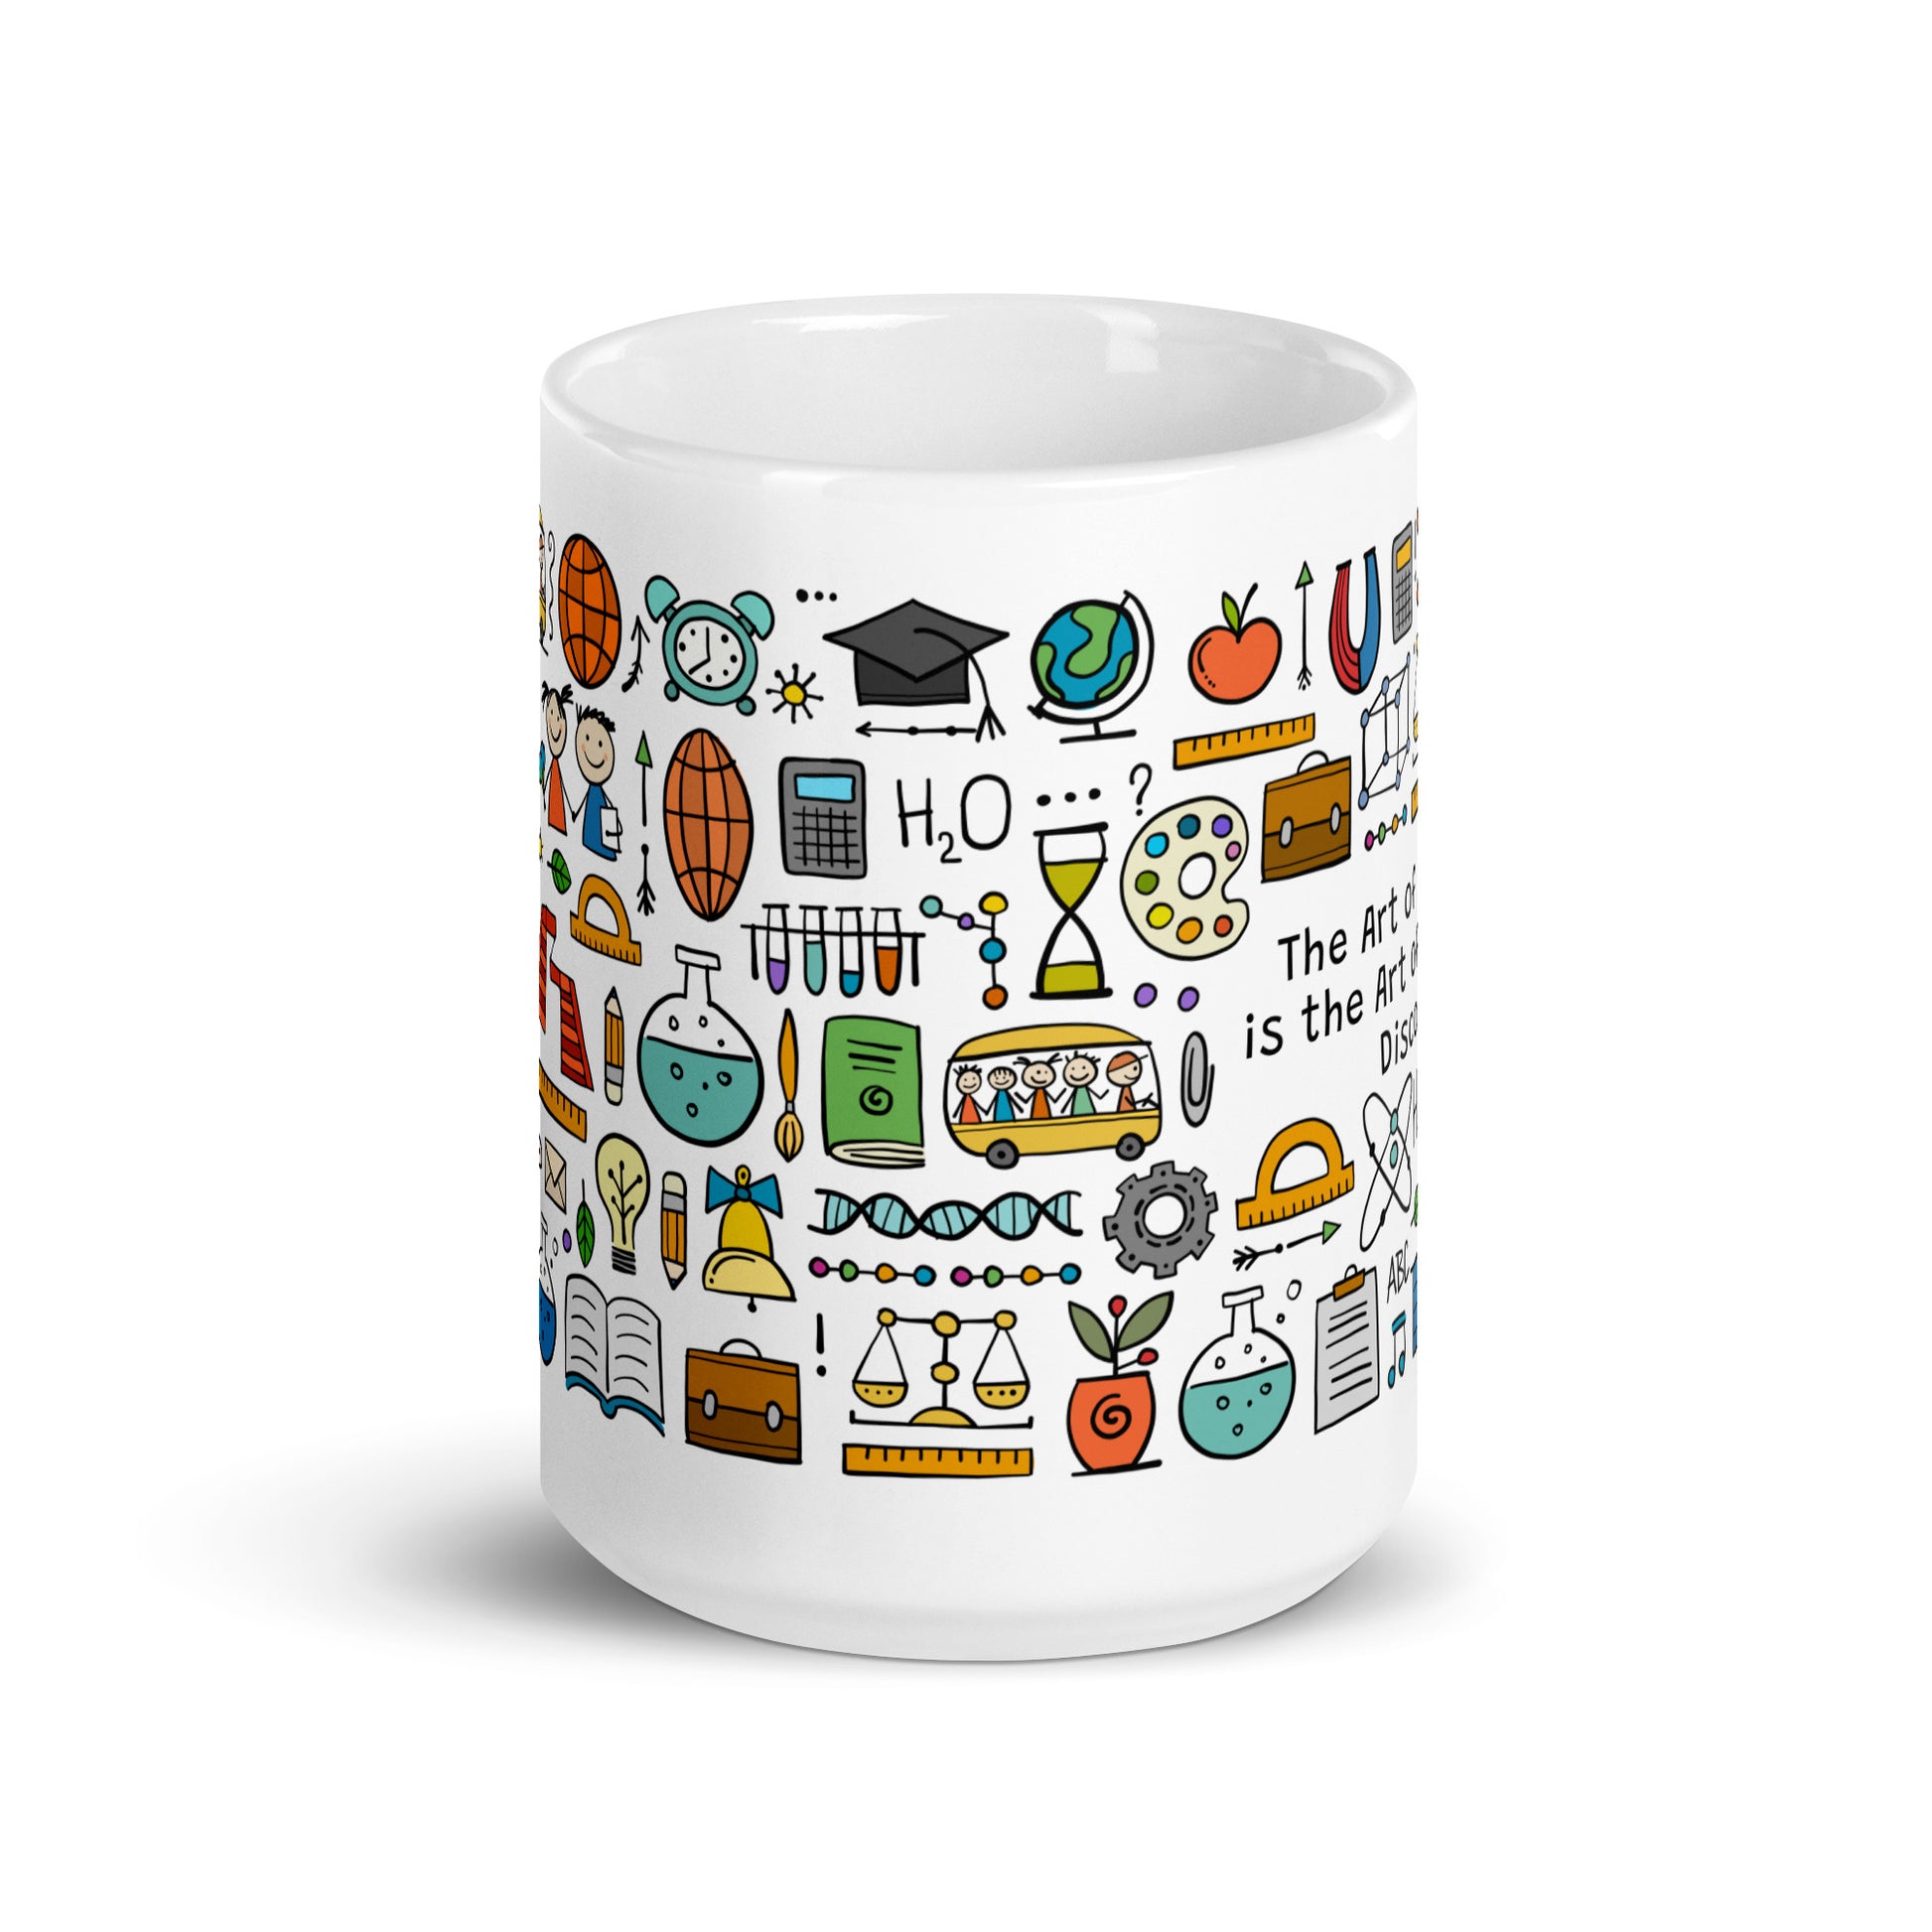 Personalized Ceramic Mug with Funny School Print kudrylab